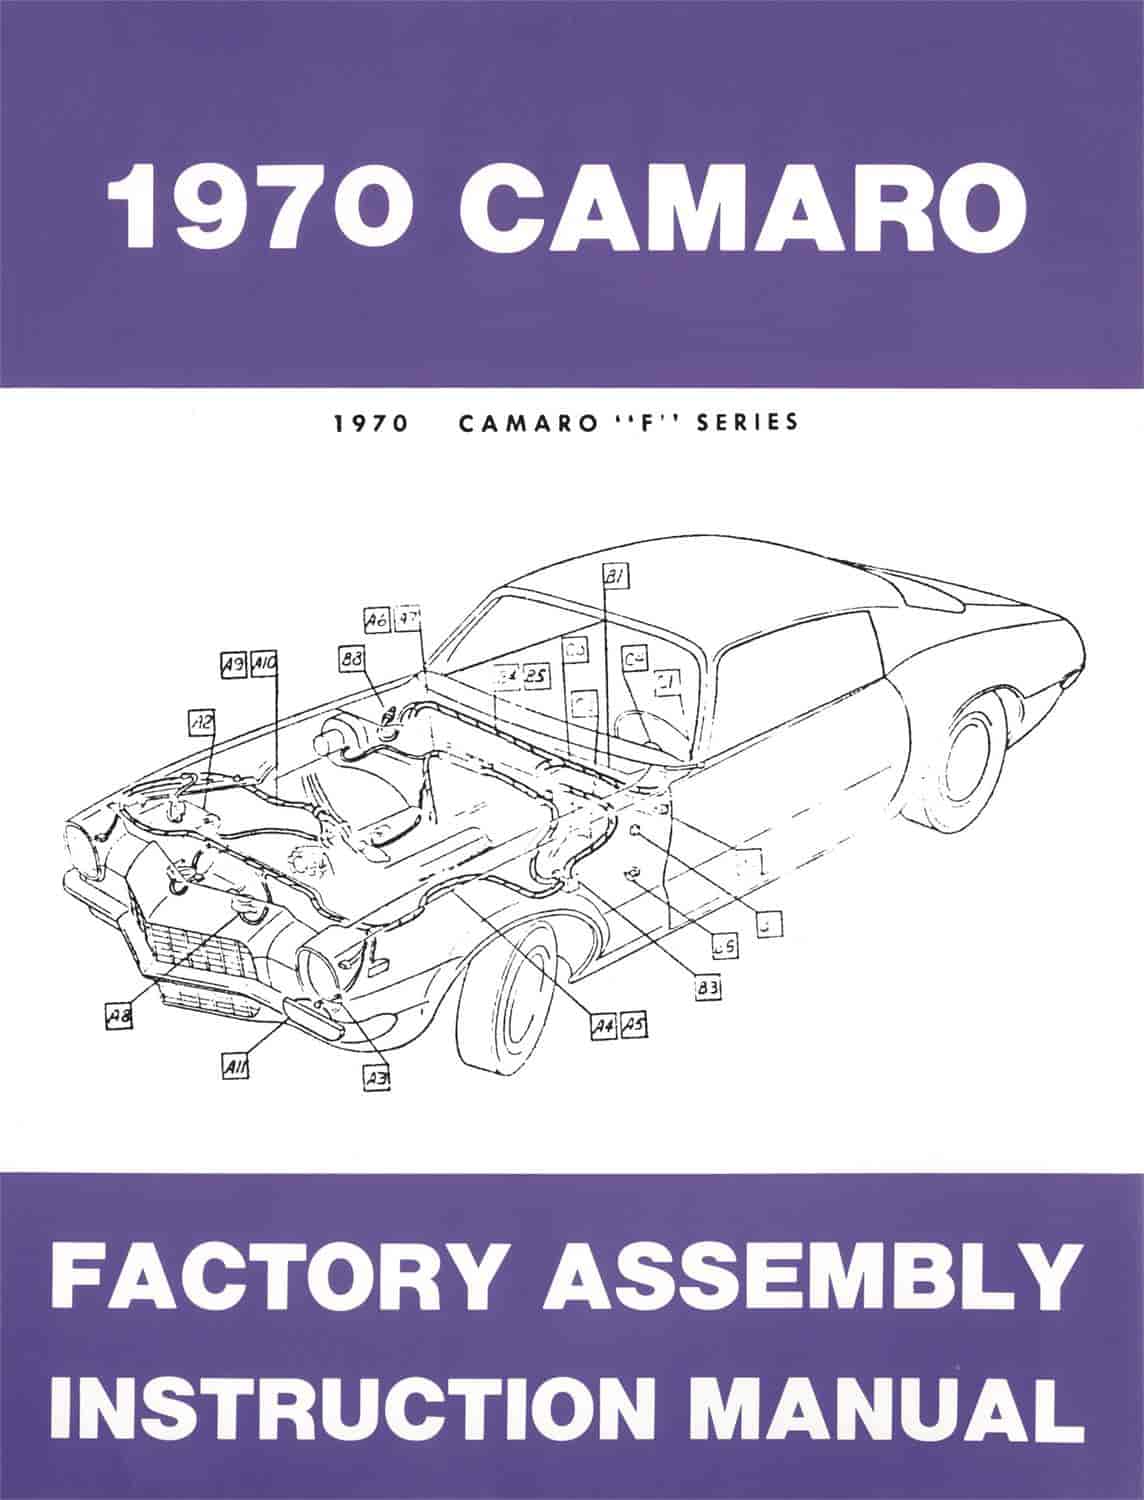 Factory Assembly Manual 1970 Chevy Camaro